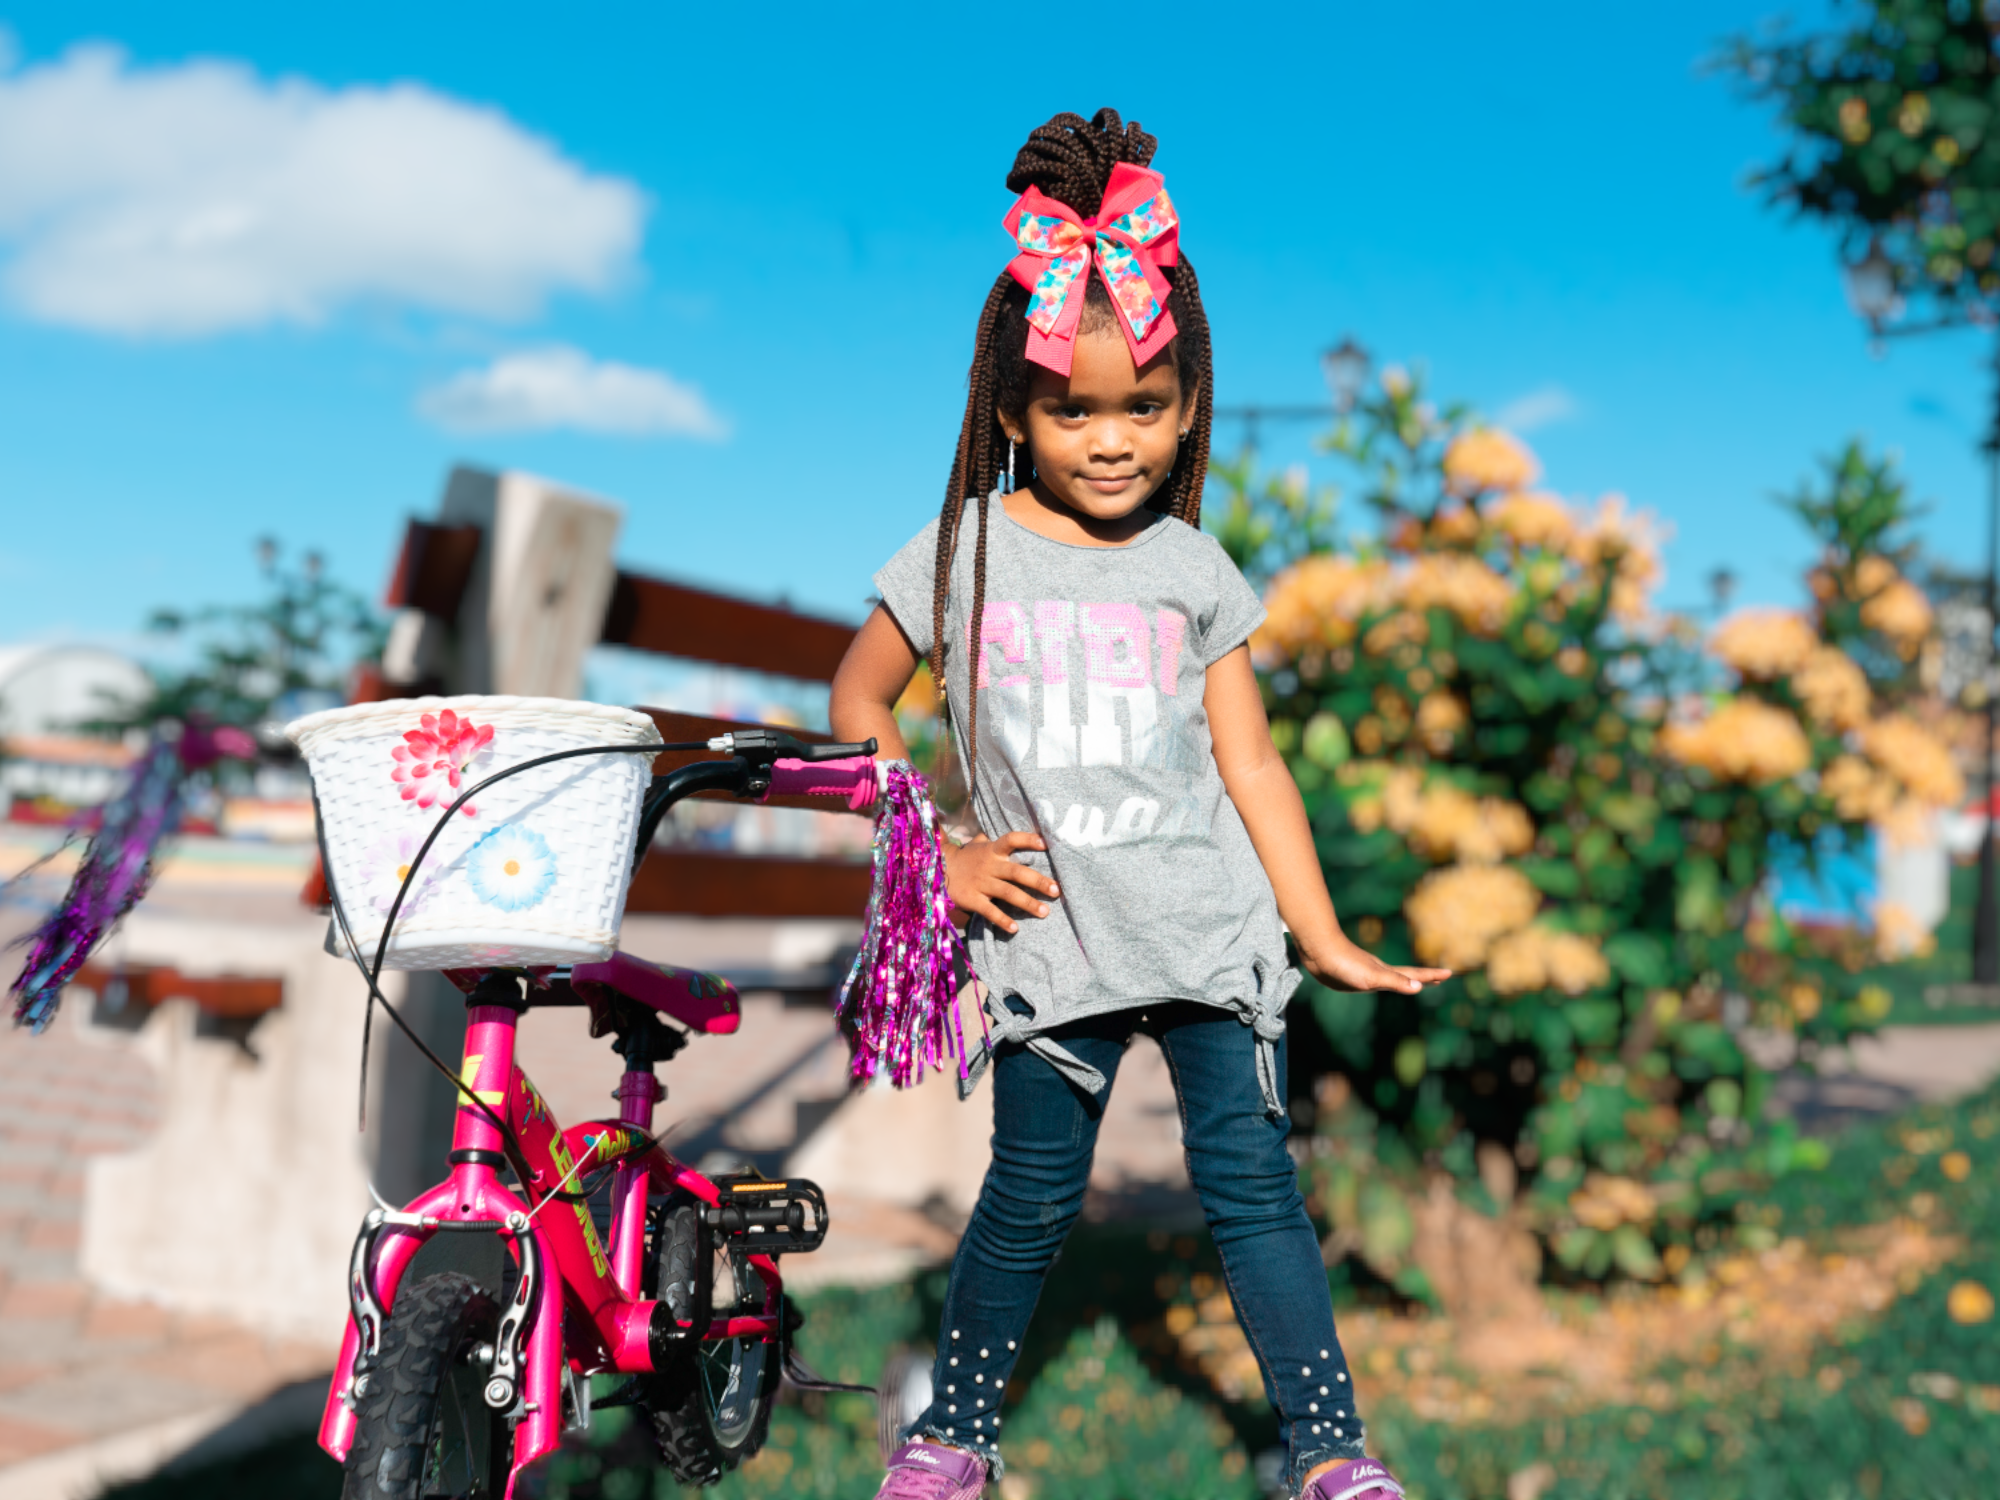 BICICLETA INFANTIL 16 pulgadas | Bicicleta infantil para niñas de aproxi. 4 a 6 años